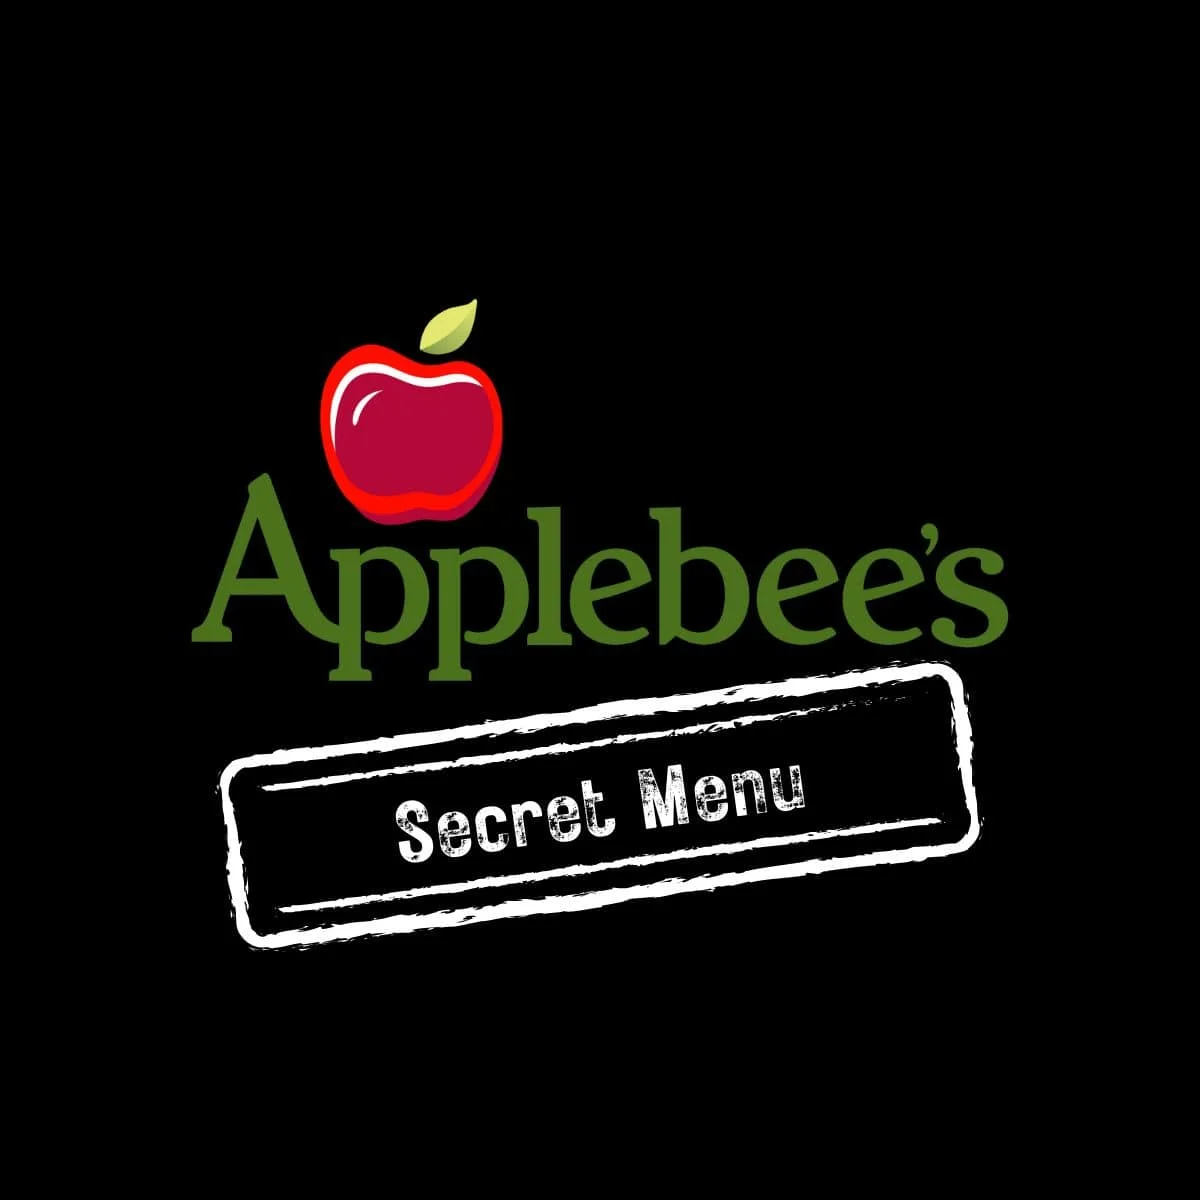 Applebee's Secret Menu